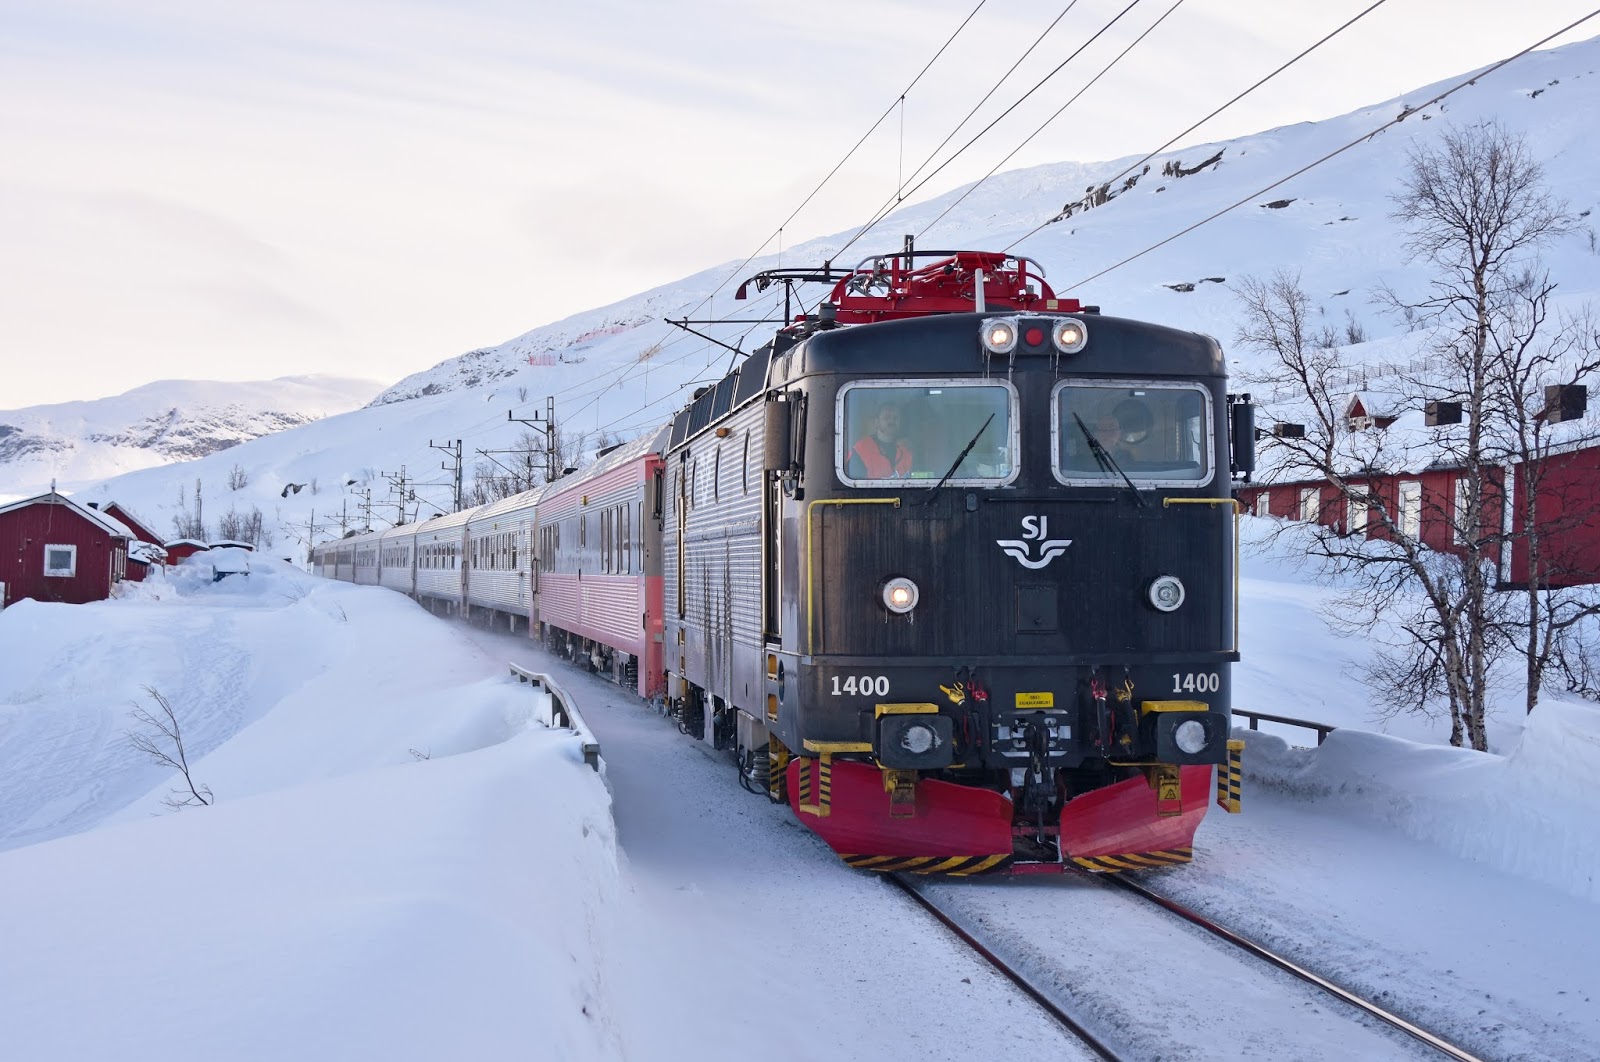 A Stockholm–Narvik járat Riksgränsennél (kép forrása: trains-today.blogspot.com)